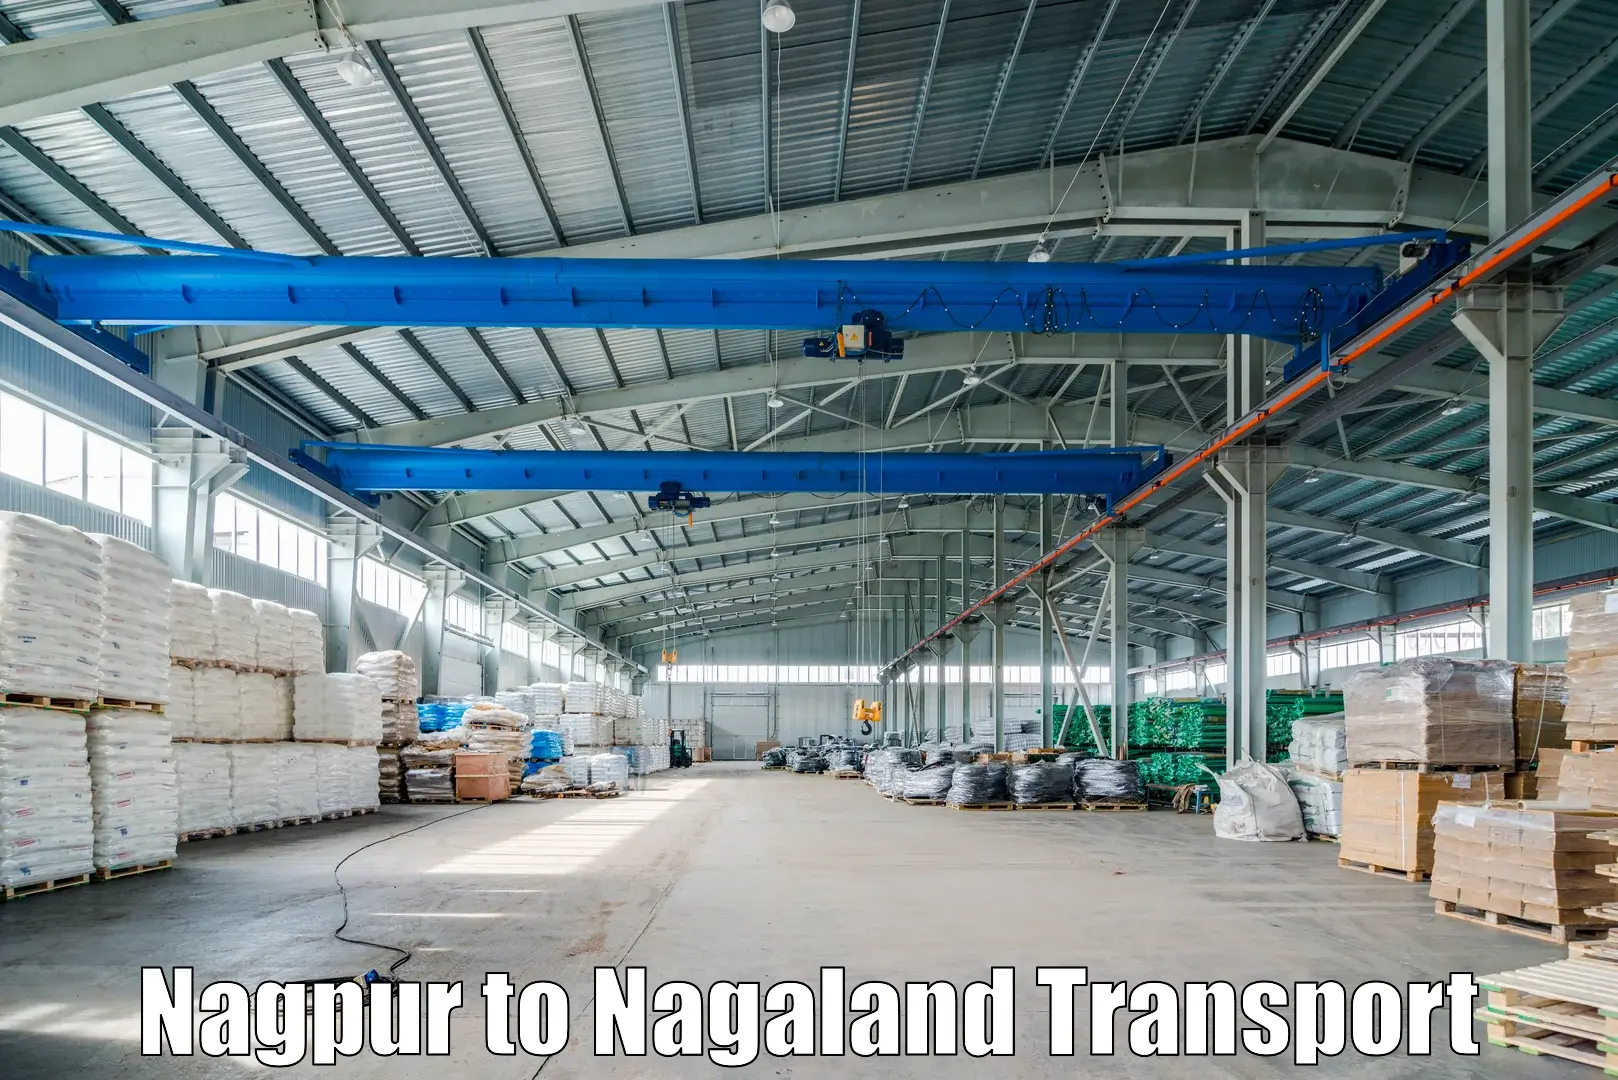 Sending bike to another city Nagpur to Nagaland